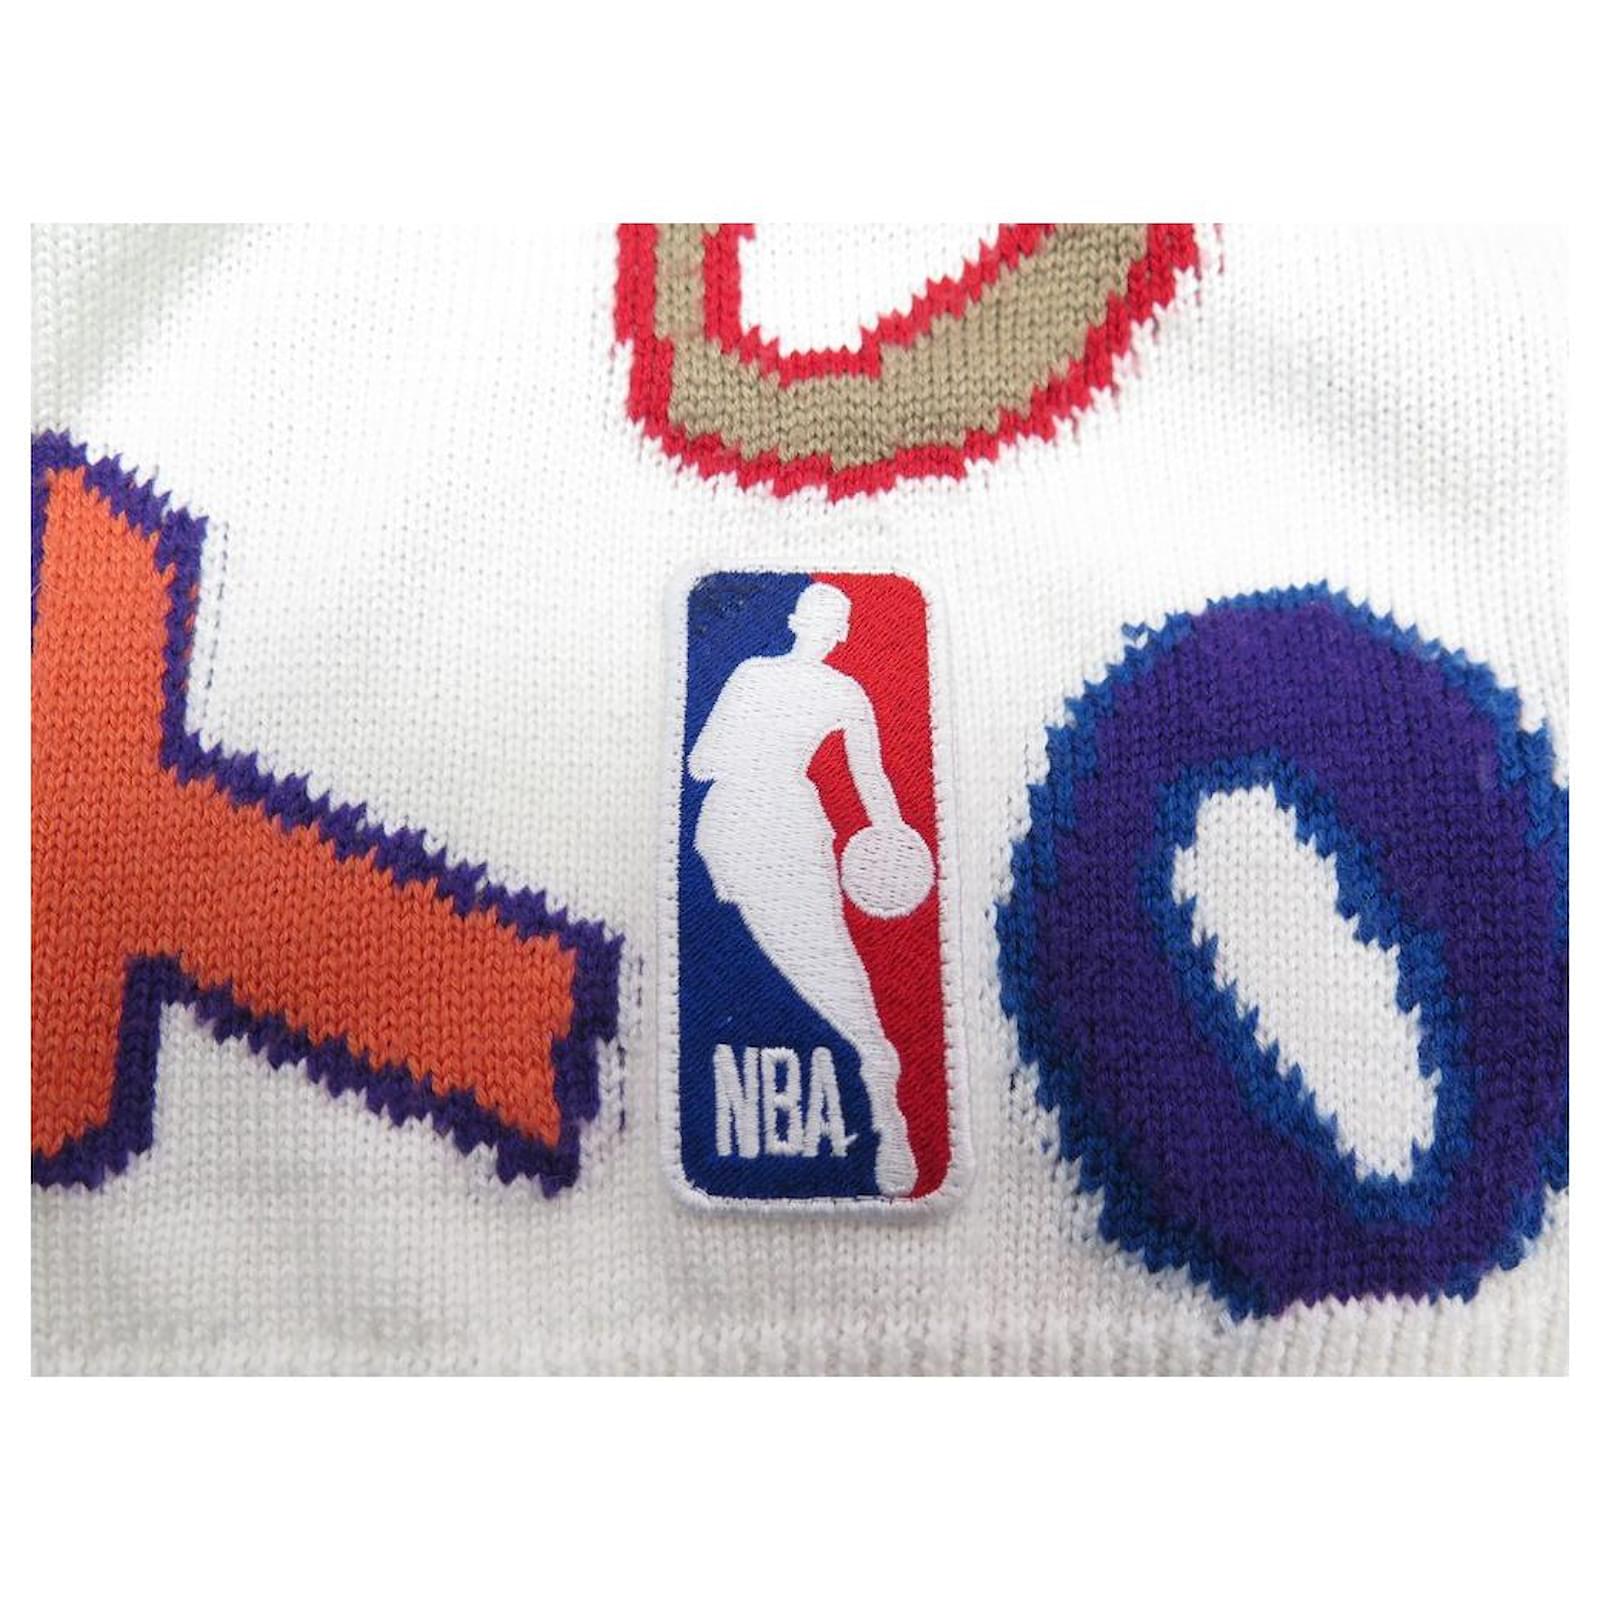 LOUIS VUITTON x NBA Letter Crewneck Knit sweater Brown Multi M Genuine /  31883